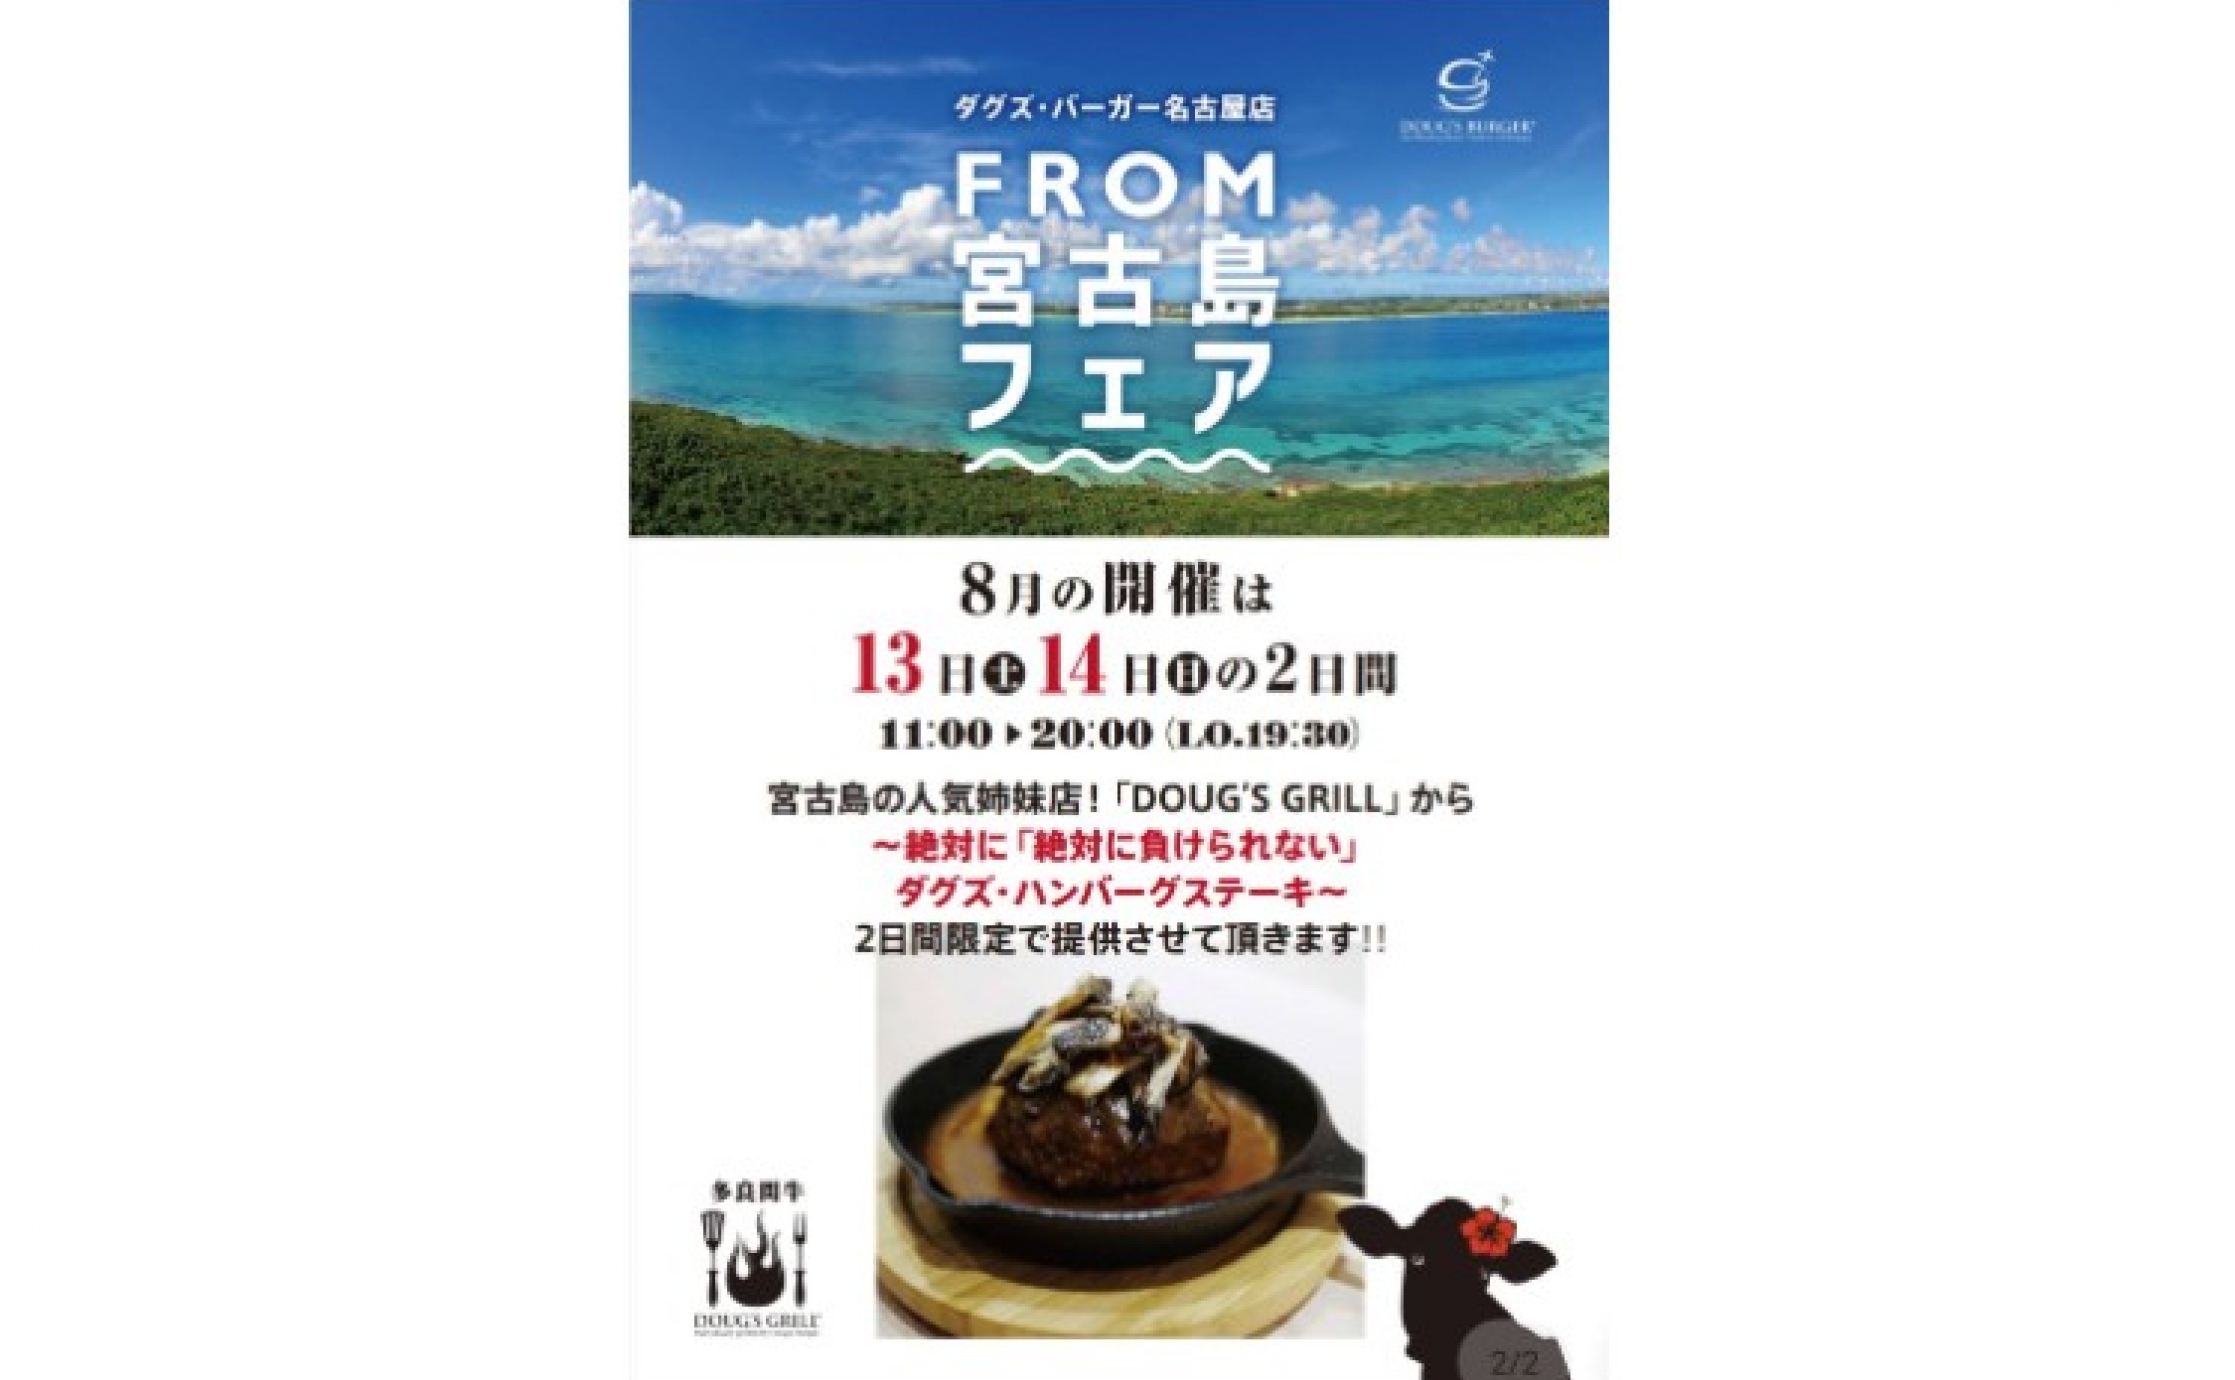 FROM宮古島フェア開催！2日間限定で「ハンバーグステーキ」が登場！！